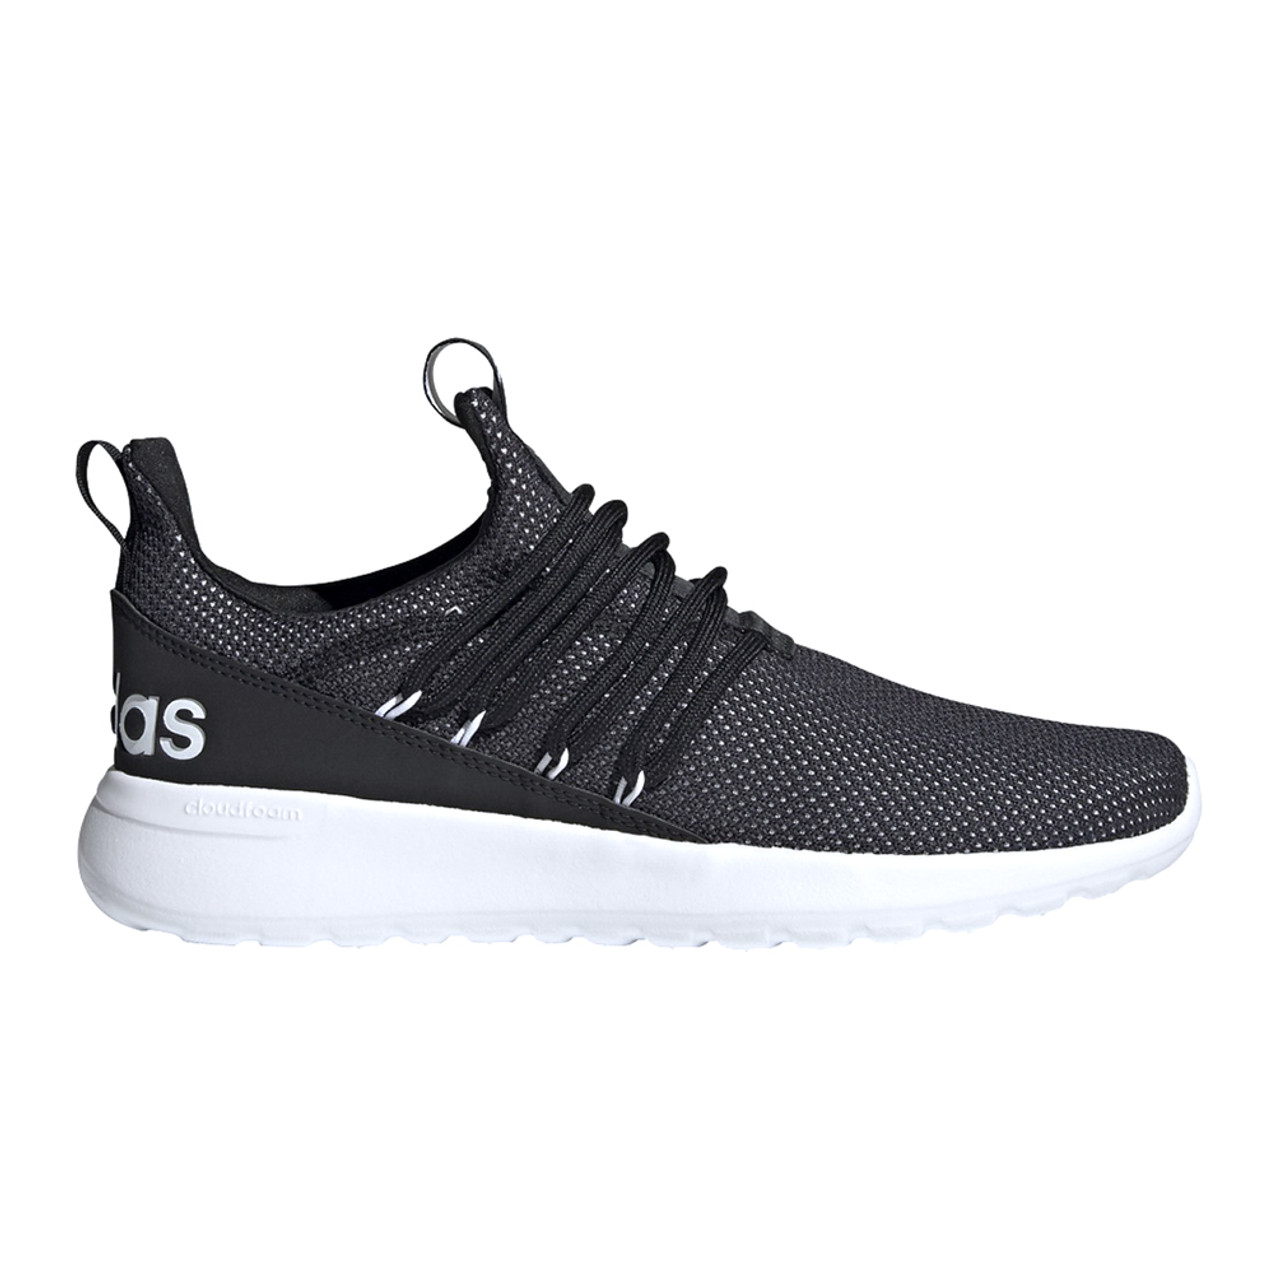 New Adidas Men's Lite Racer Adapt 3.0 Sneaker Core Black/Core Black Core Black/Core Black | Discount Adidas Men's Athletic Shoes More - Shoolu.com | Shoolu.com